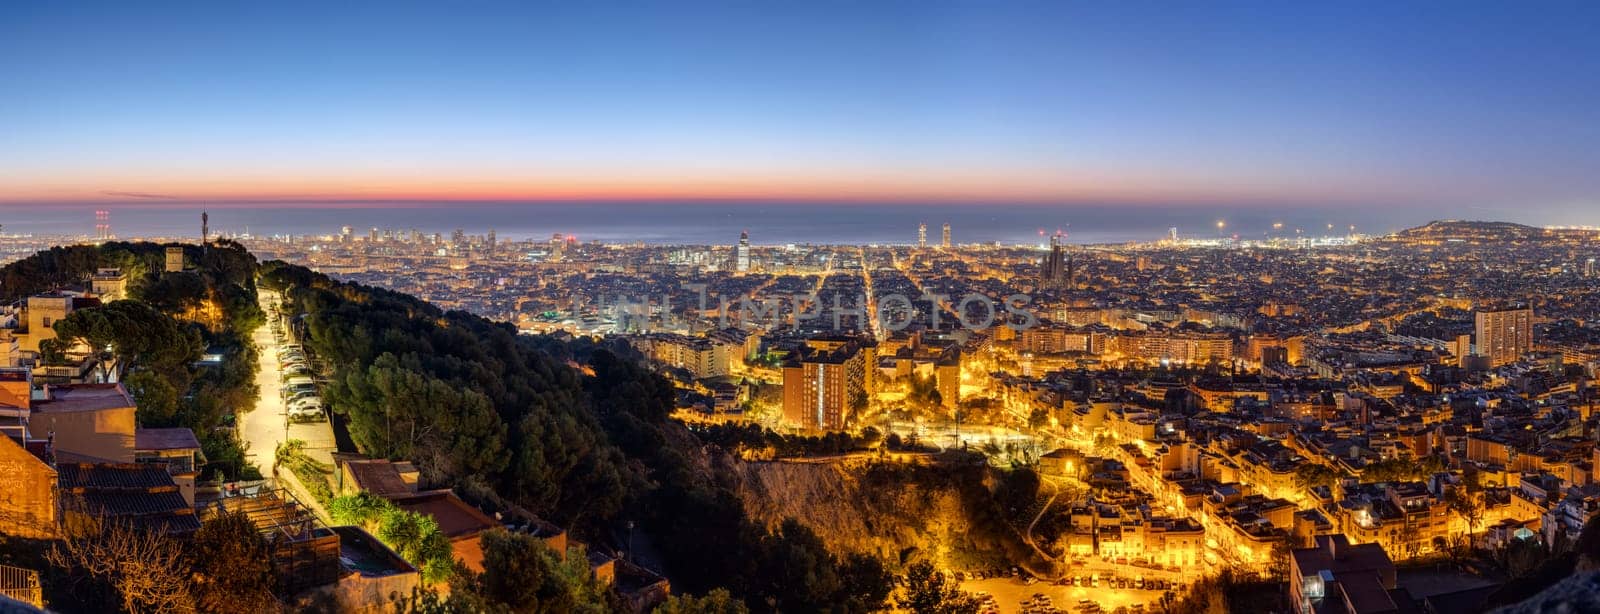 Panorama of Barcelona before sunrise by elxeneize